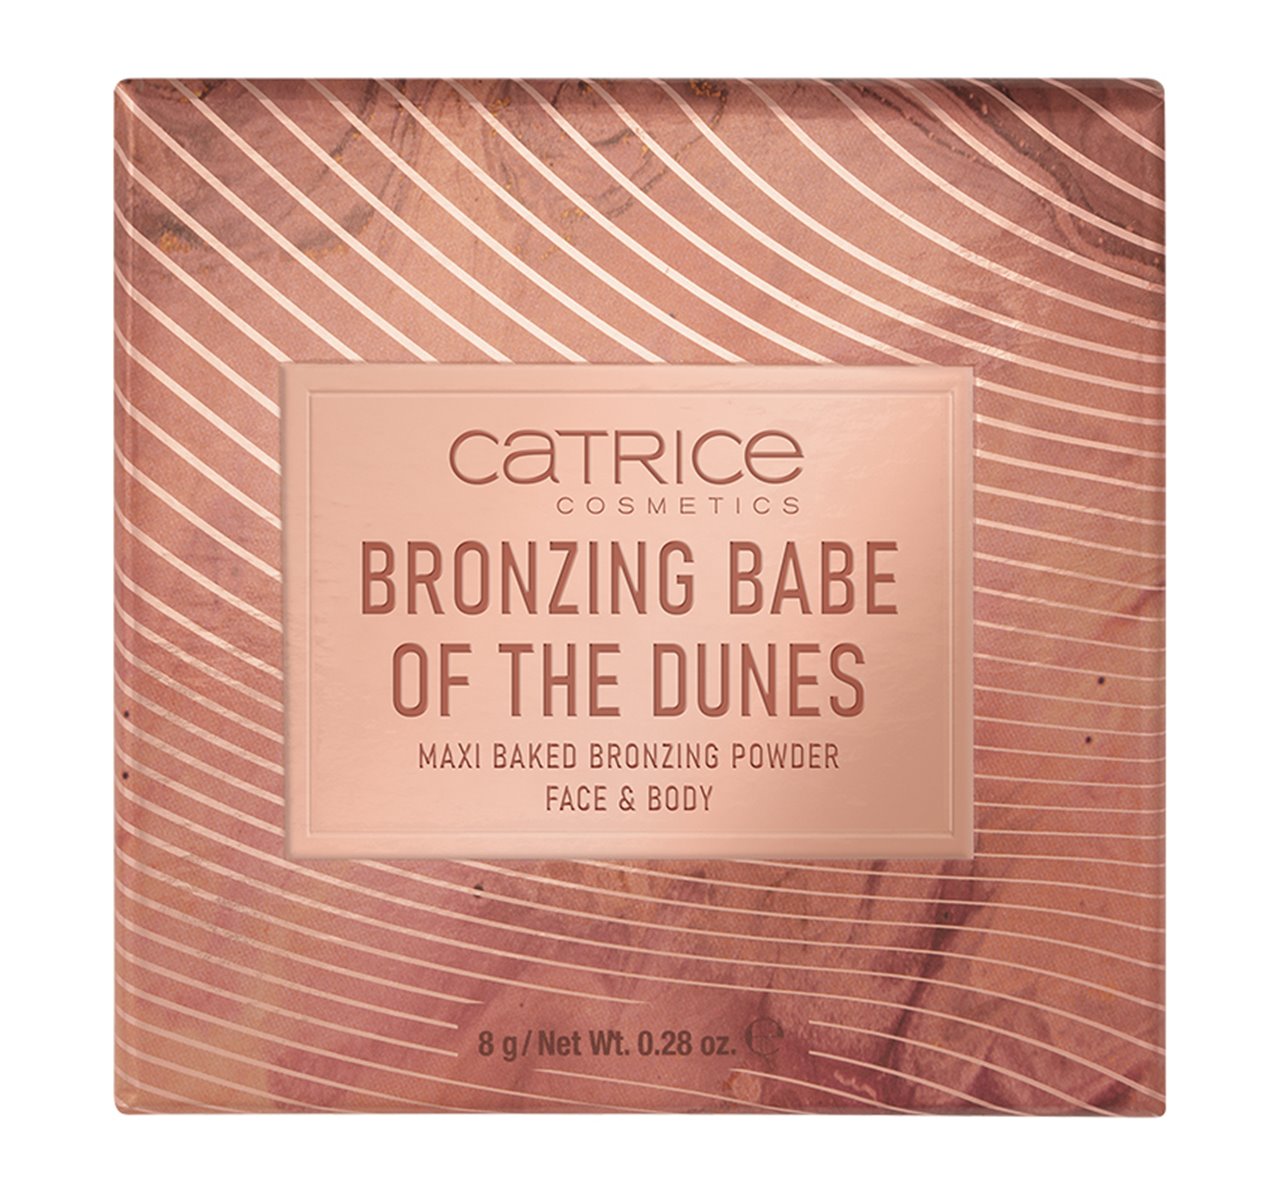 Catrice Bronzing Baked Of Powder-Face Bronzing Dunes Babe Maxi The